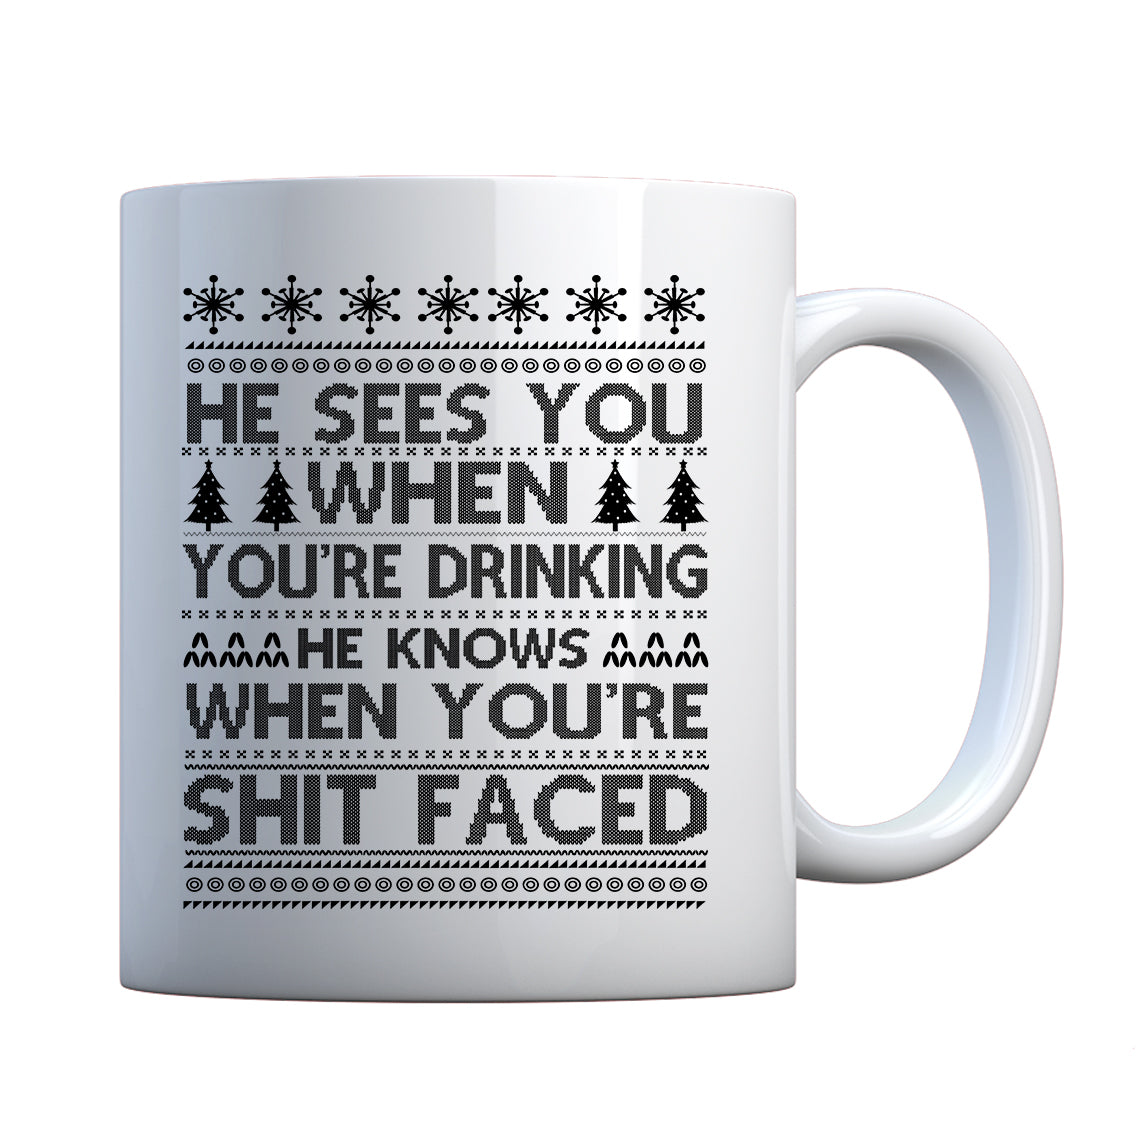 Mug He Sees Your When You're Sleeping Ceramic Gift Mug